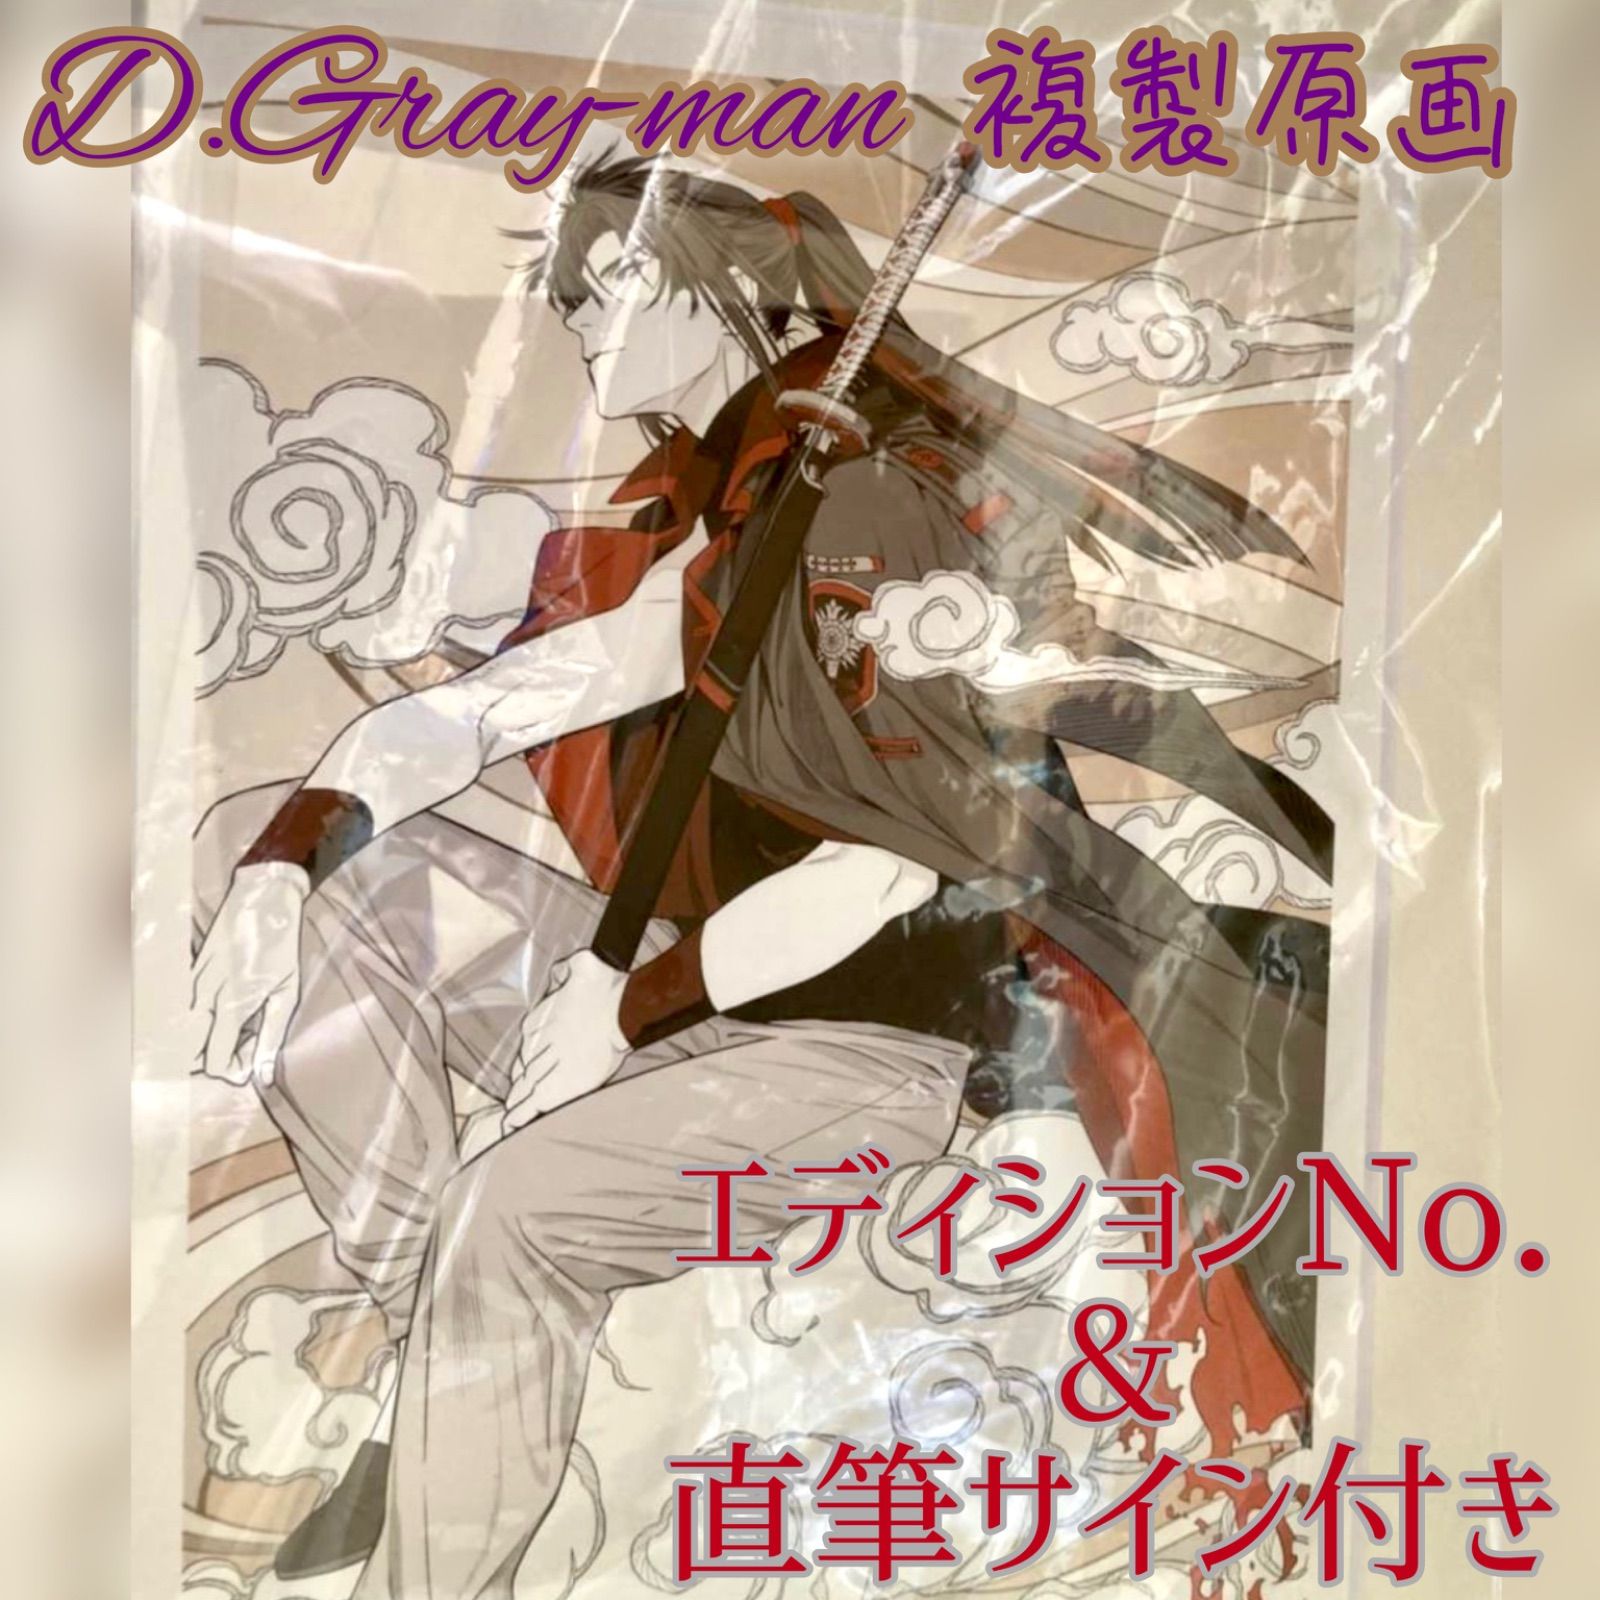 D.gray-man 原画展 神田 6点セット